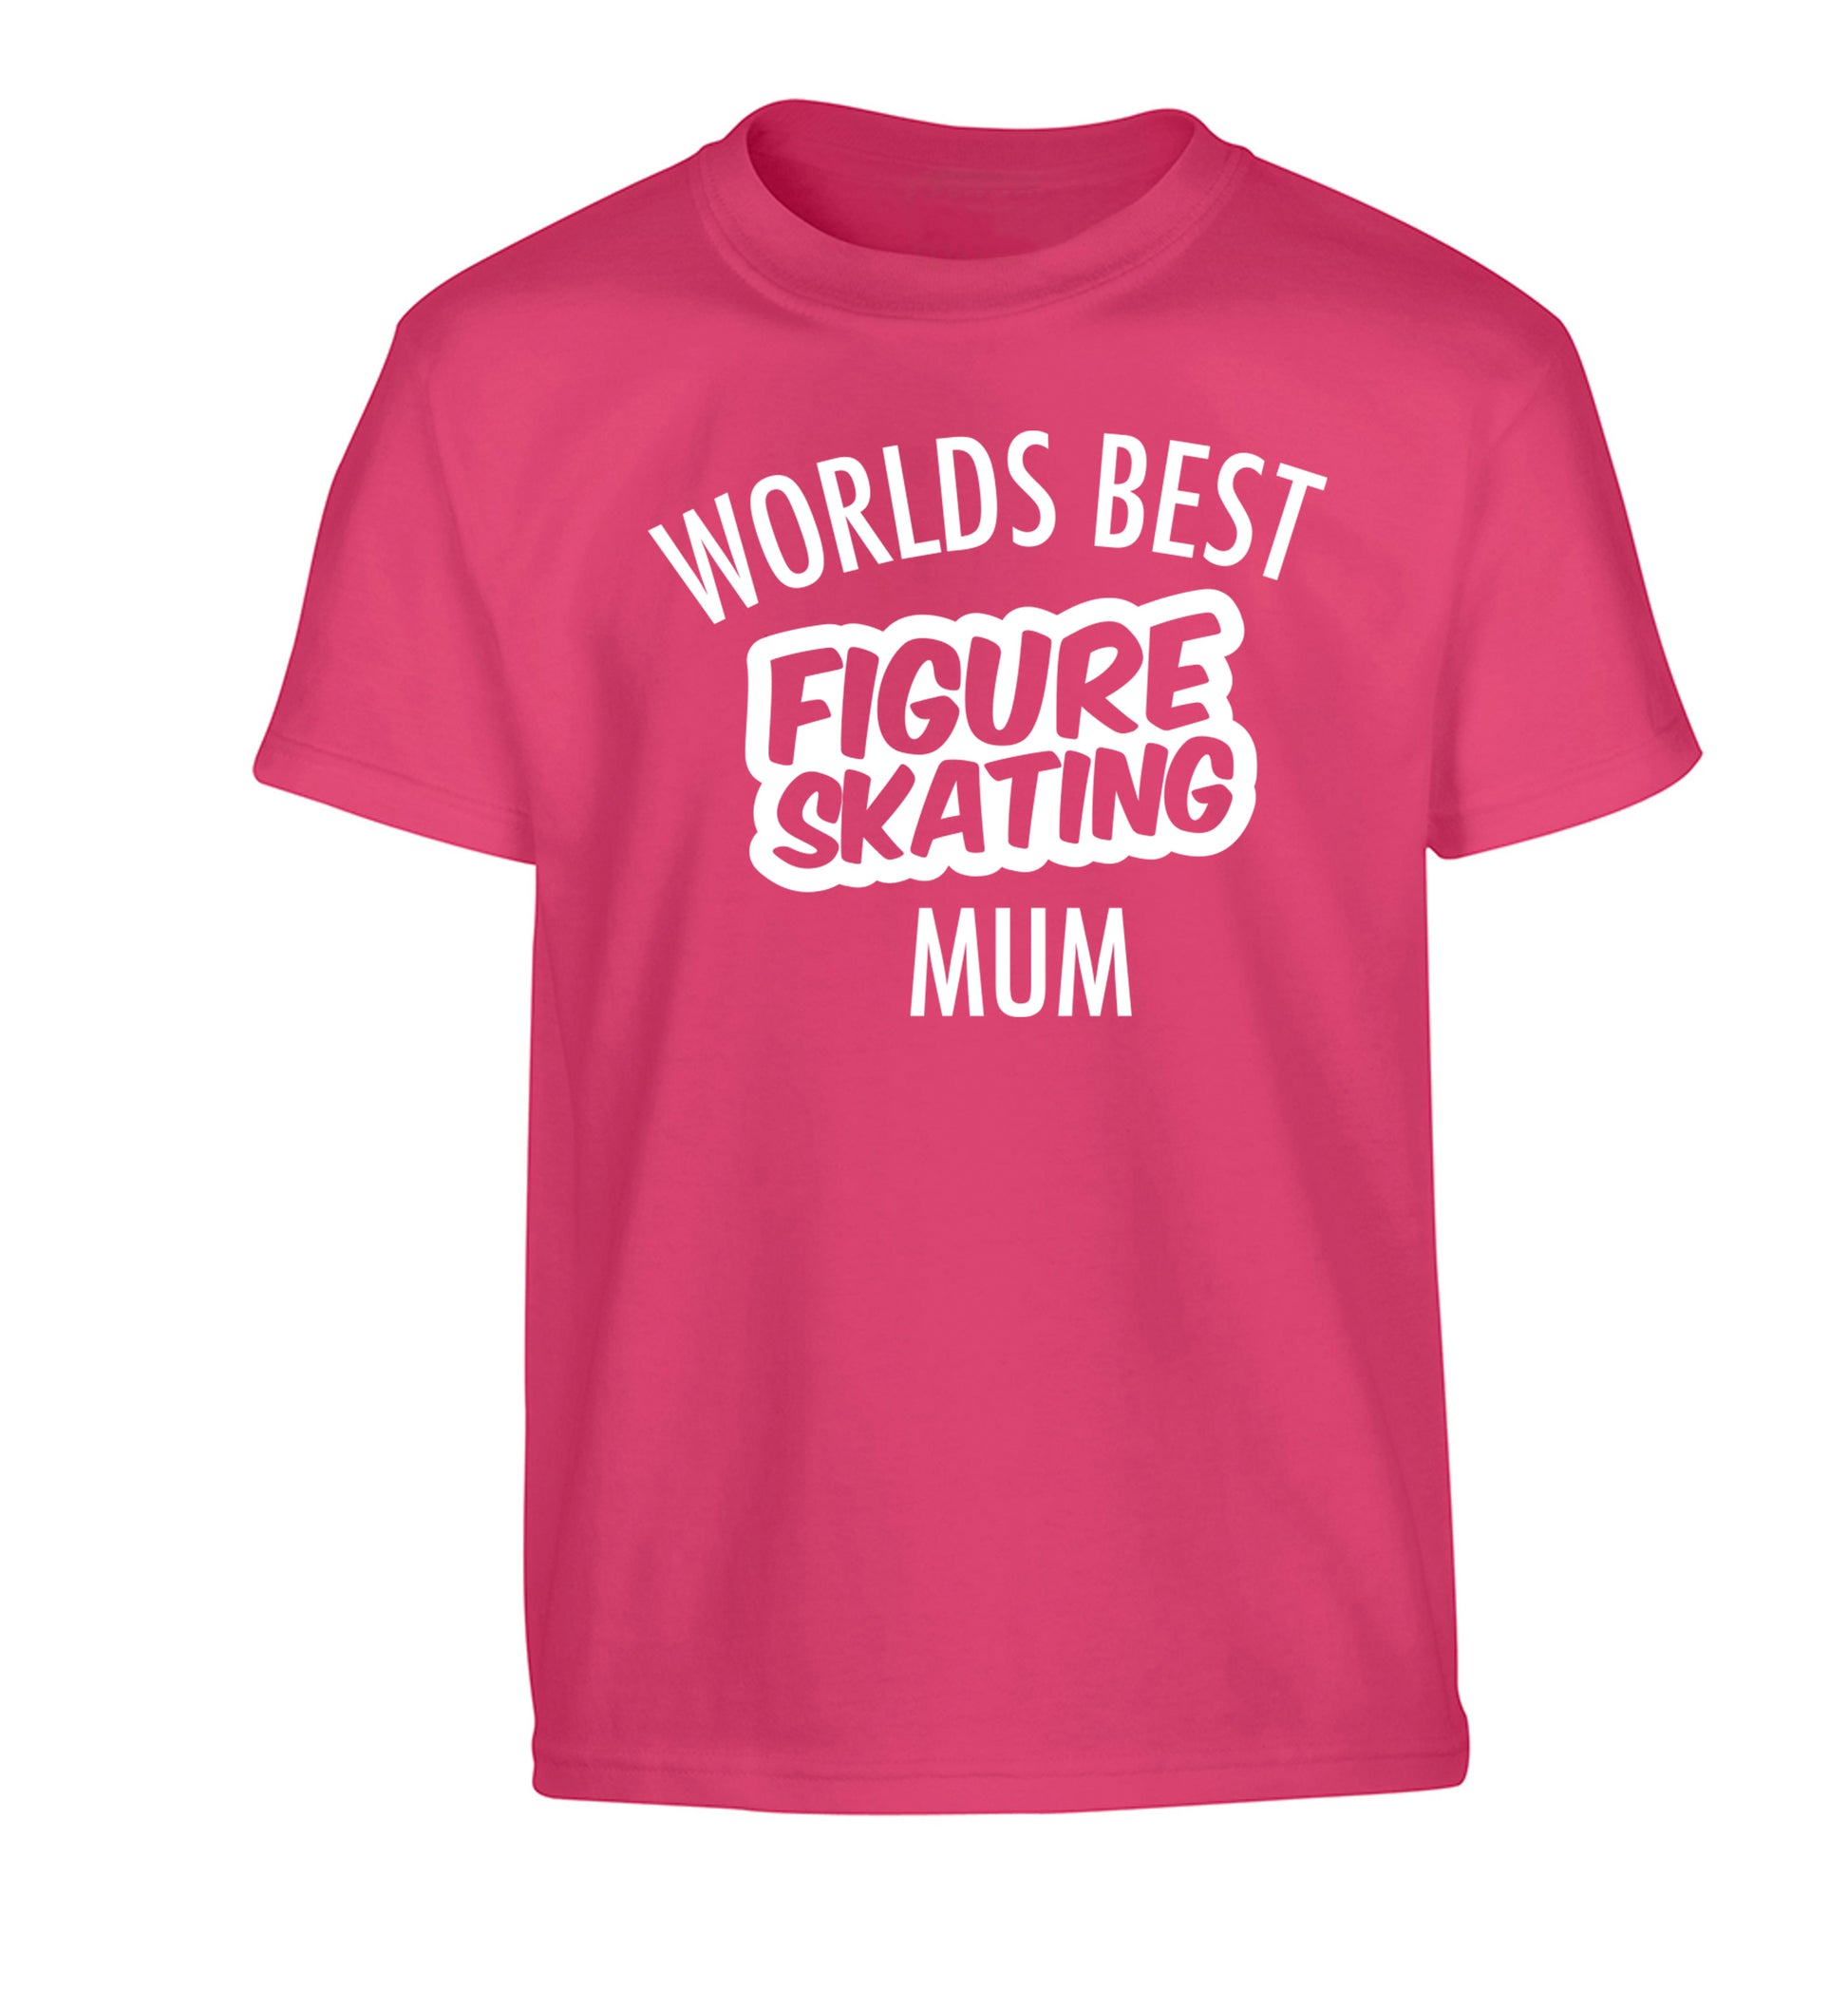 Worlds best figure skating mum Children's pink Tshirt 12-14 Years